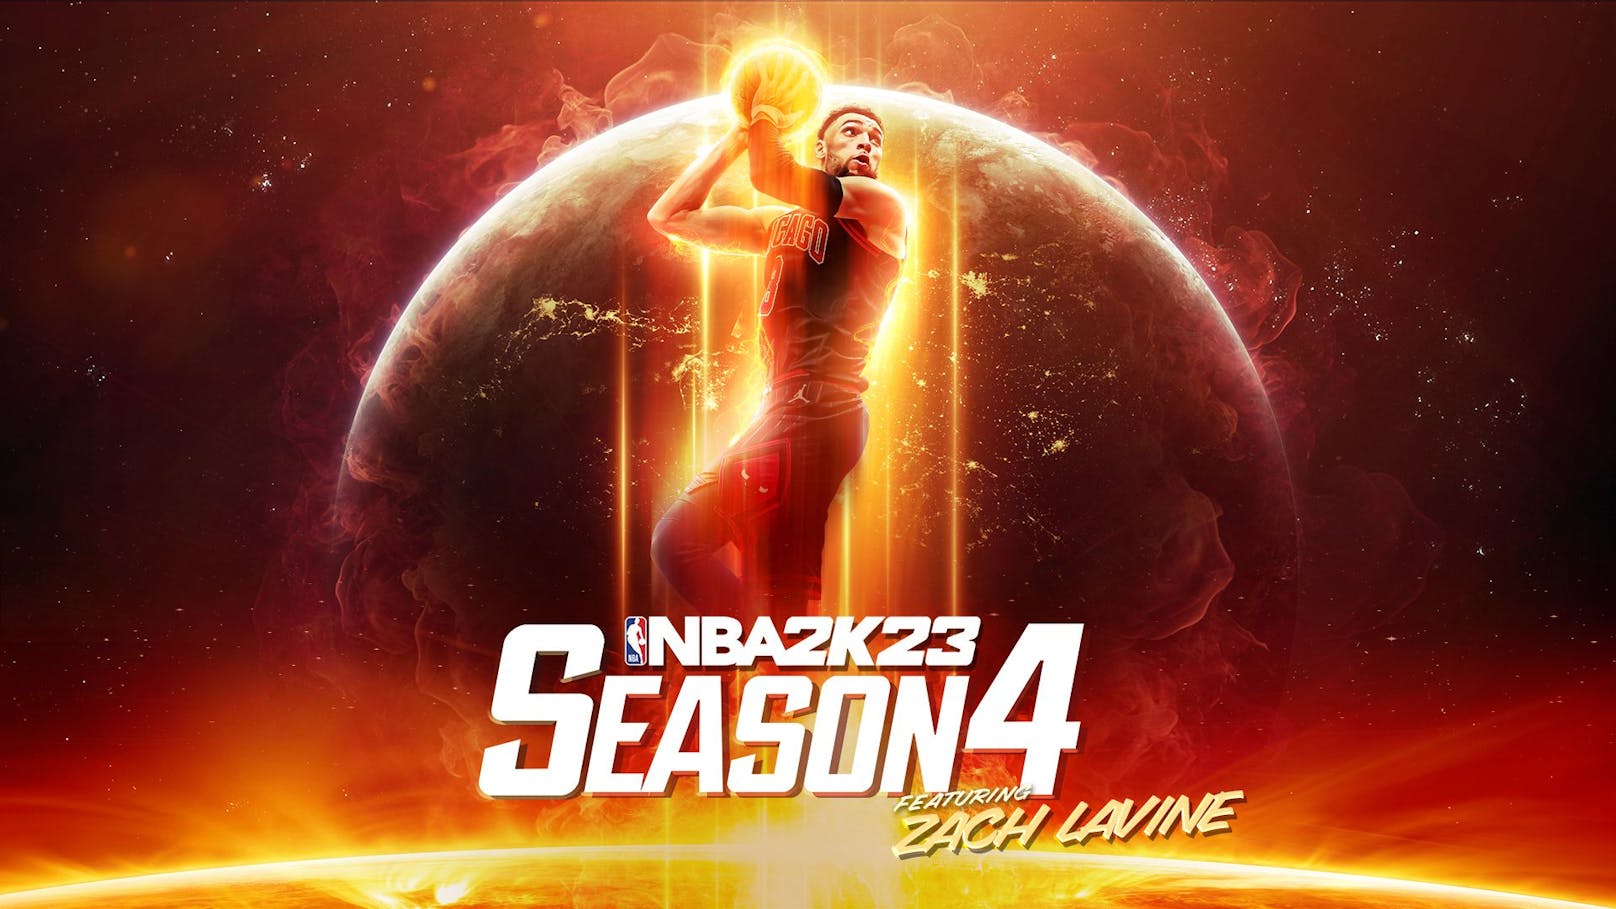 NBA 2K23 Season 4: Die Jagd nach dem Legenden-Status beginnt am 13. Januar